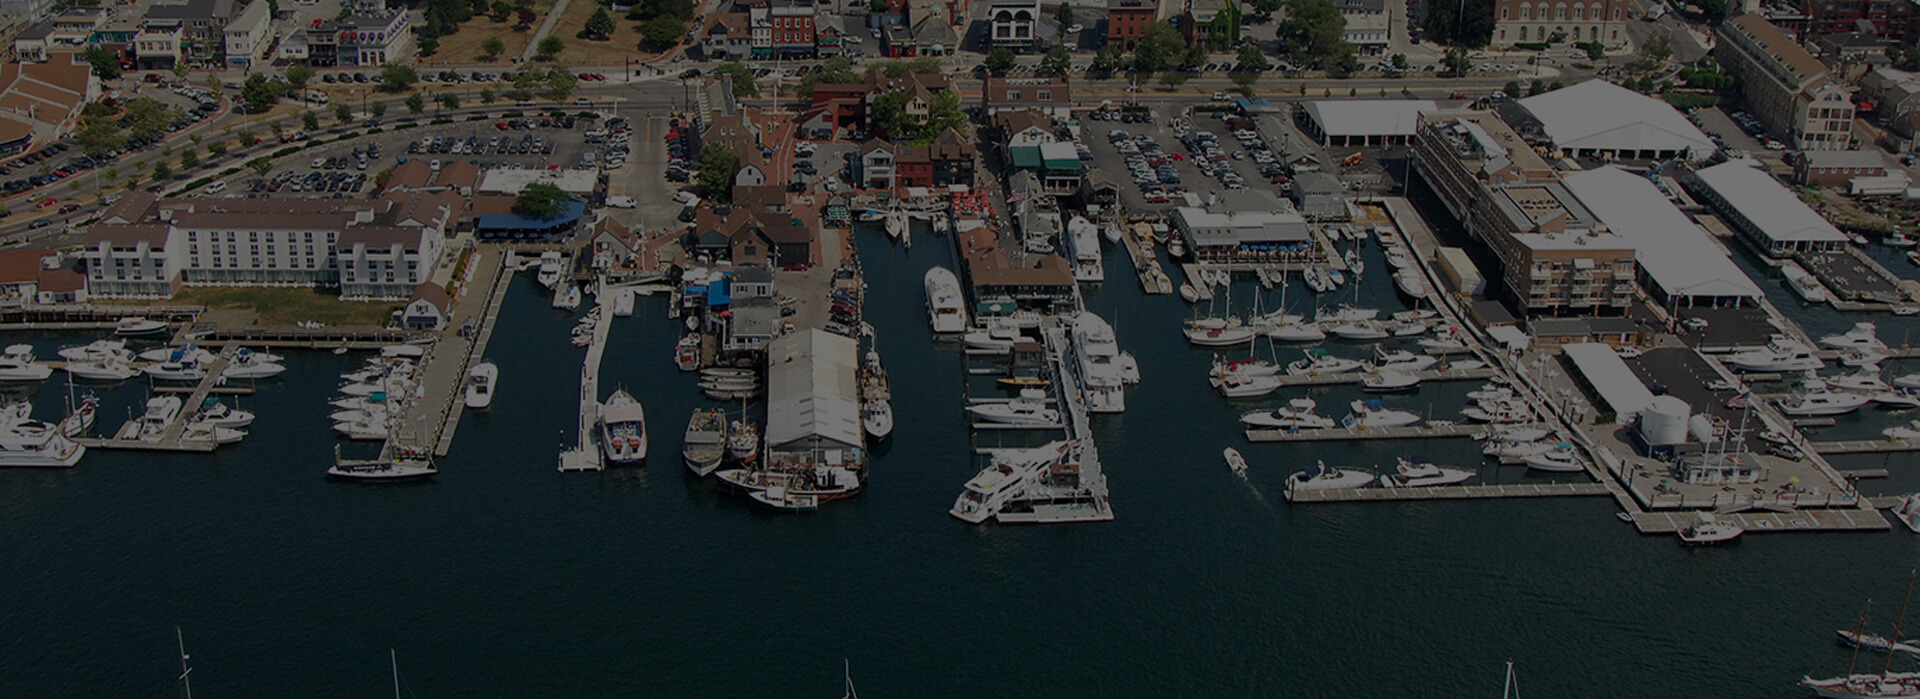 Newport Rhode Island Bowen's Wharf Marina